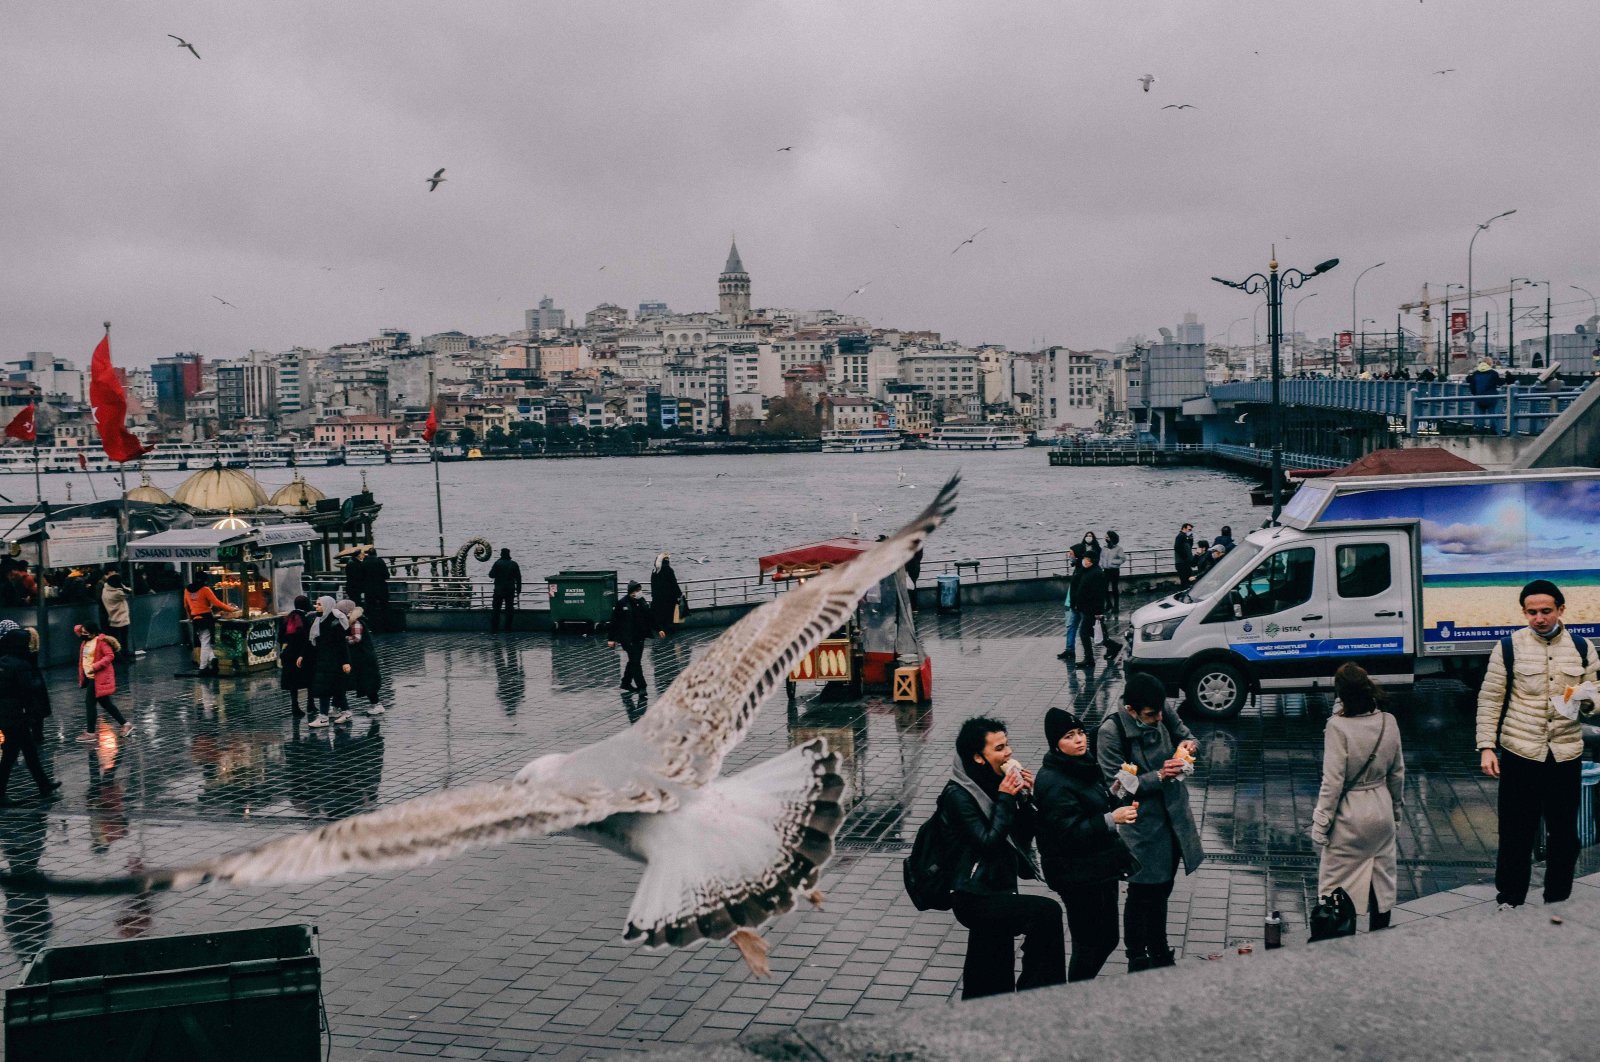 Birds fly as bystanders eat at Eminönü Square in Istanbul, Turkey, Dec. 15, 2020. (AFP Photo)